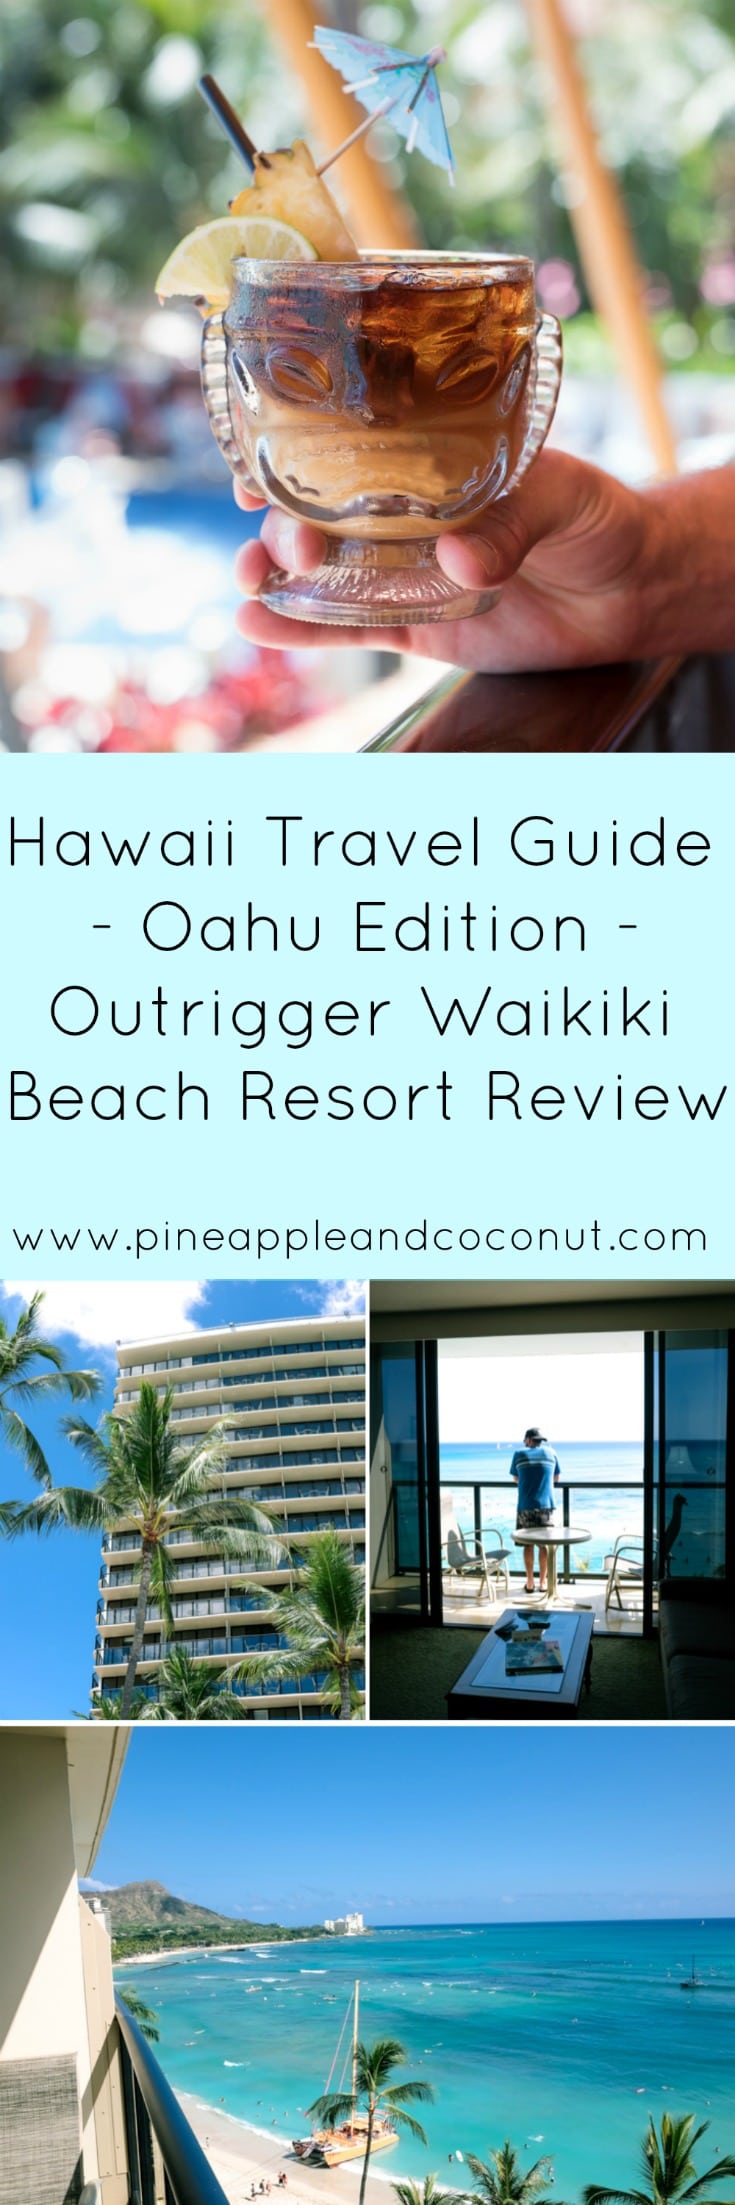 Hawaii Travel Guide Oahu Edition - Outrigger Waikiki Beach Resort Review www.pineappleandcoconut.com